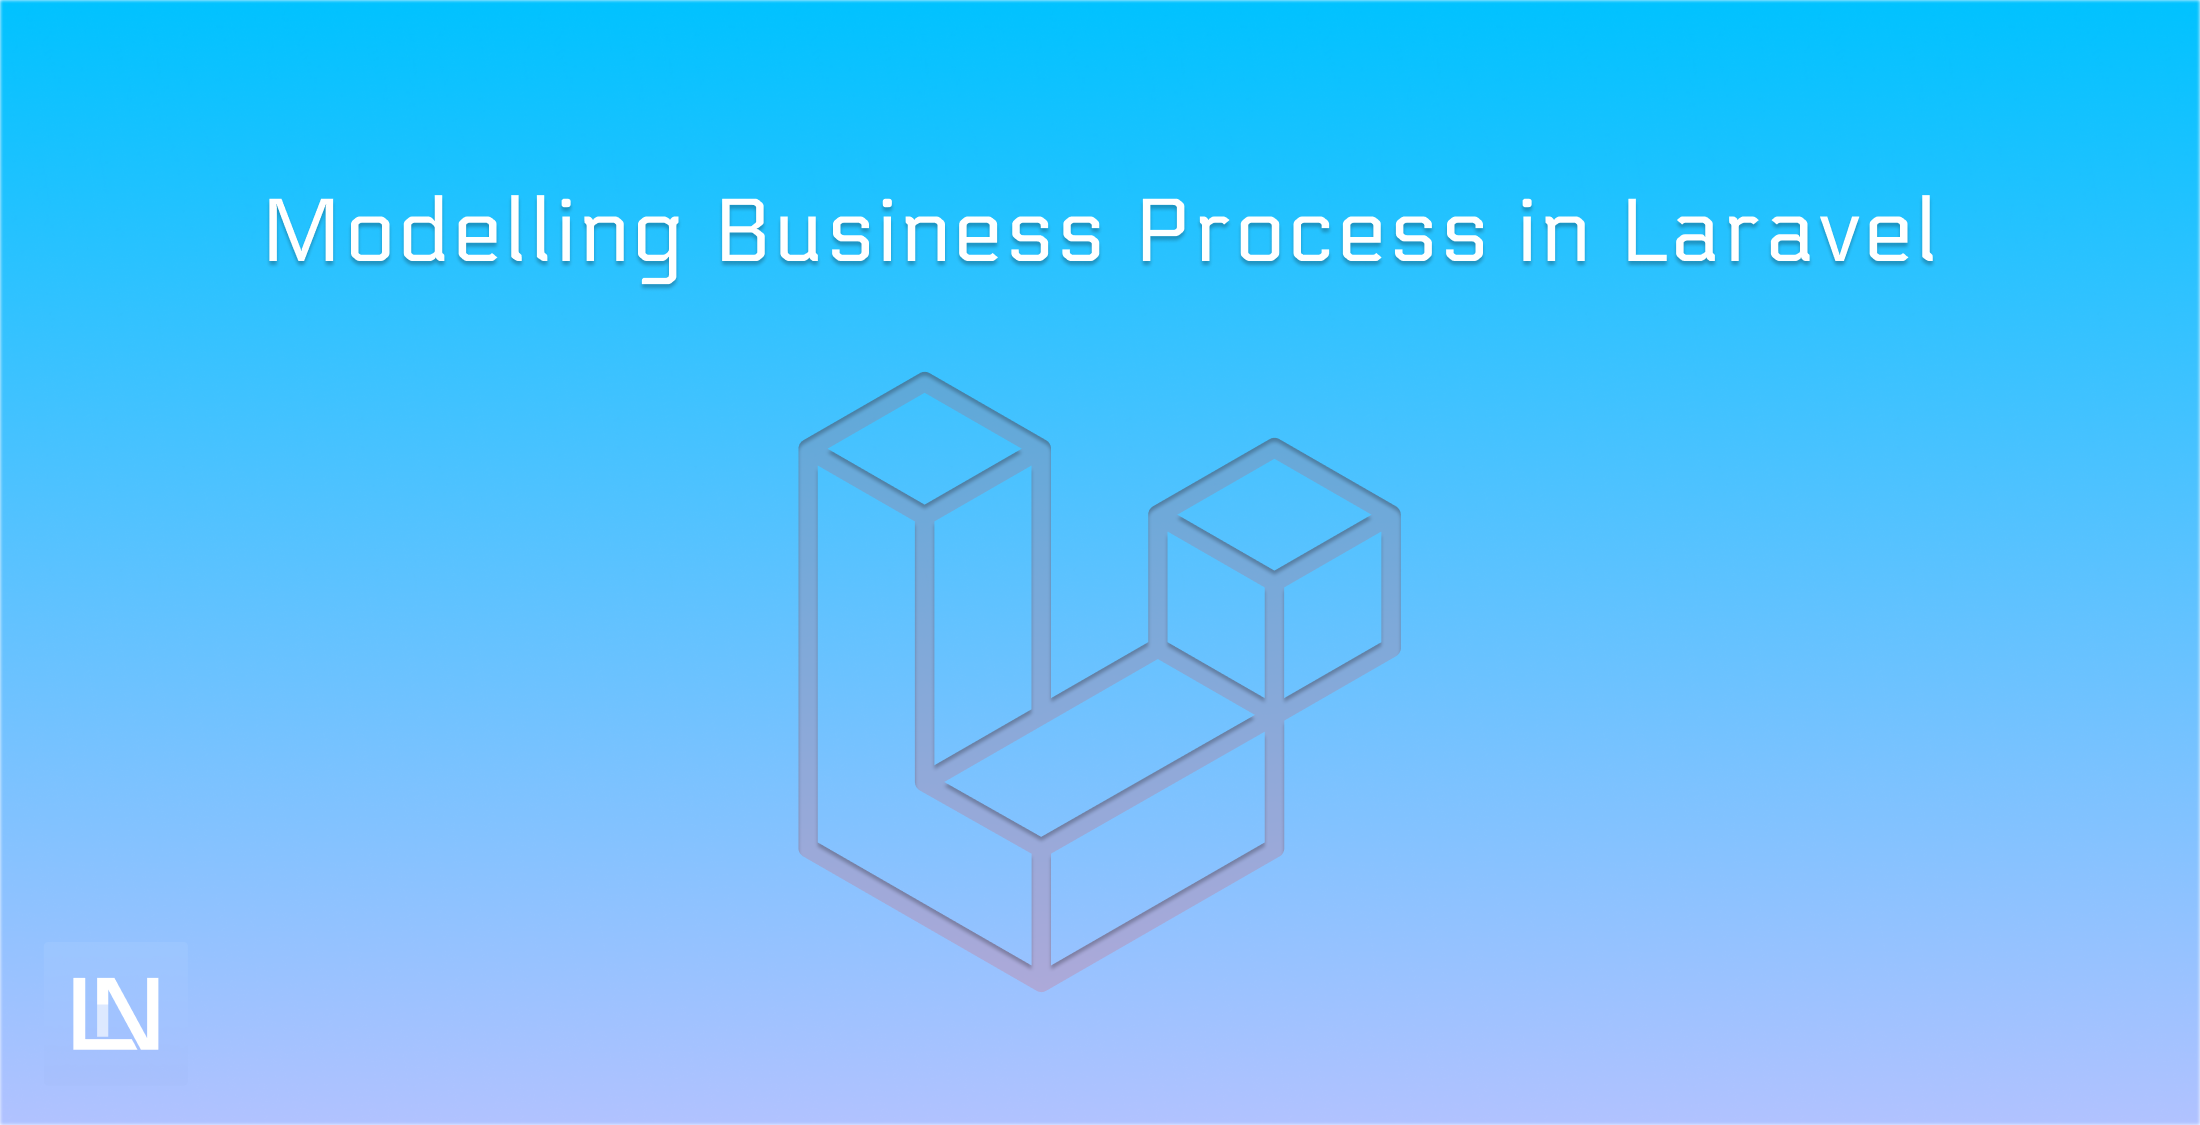 Modelling Busines Processes in Laravel image